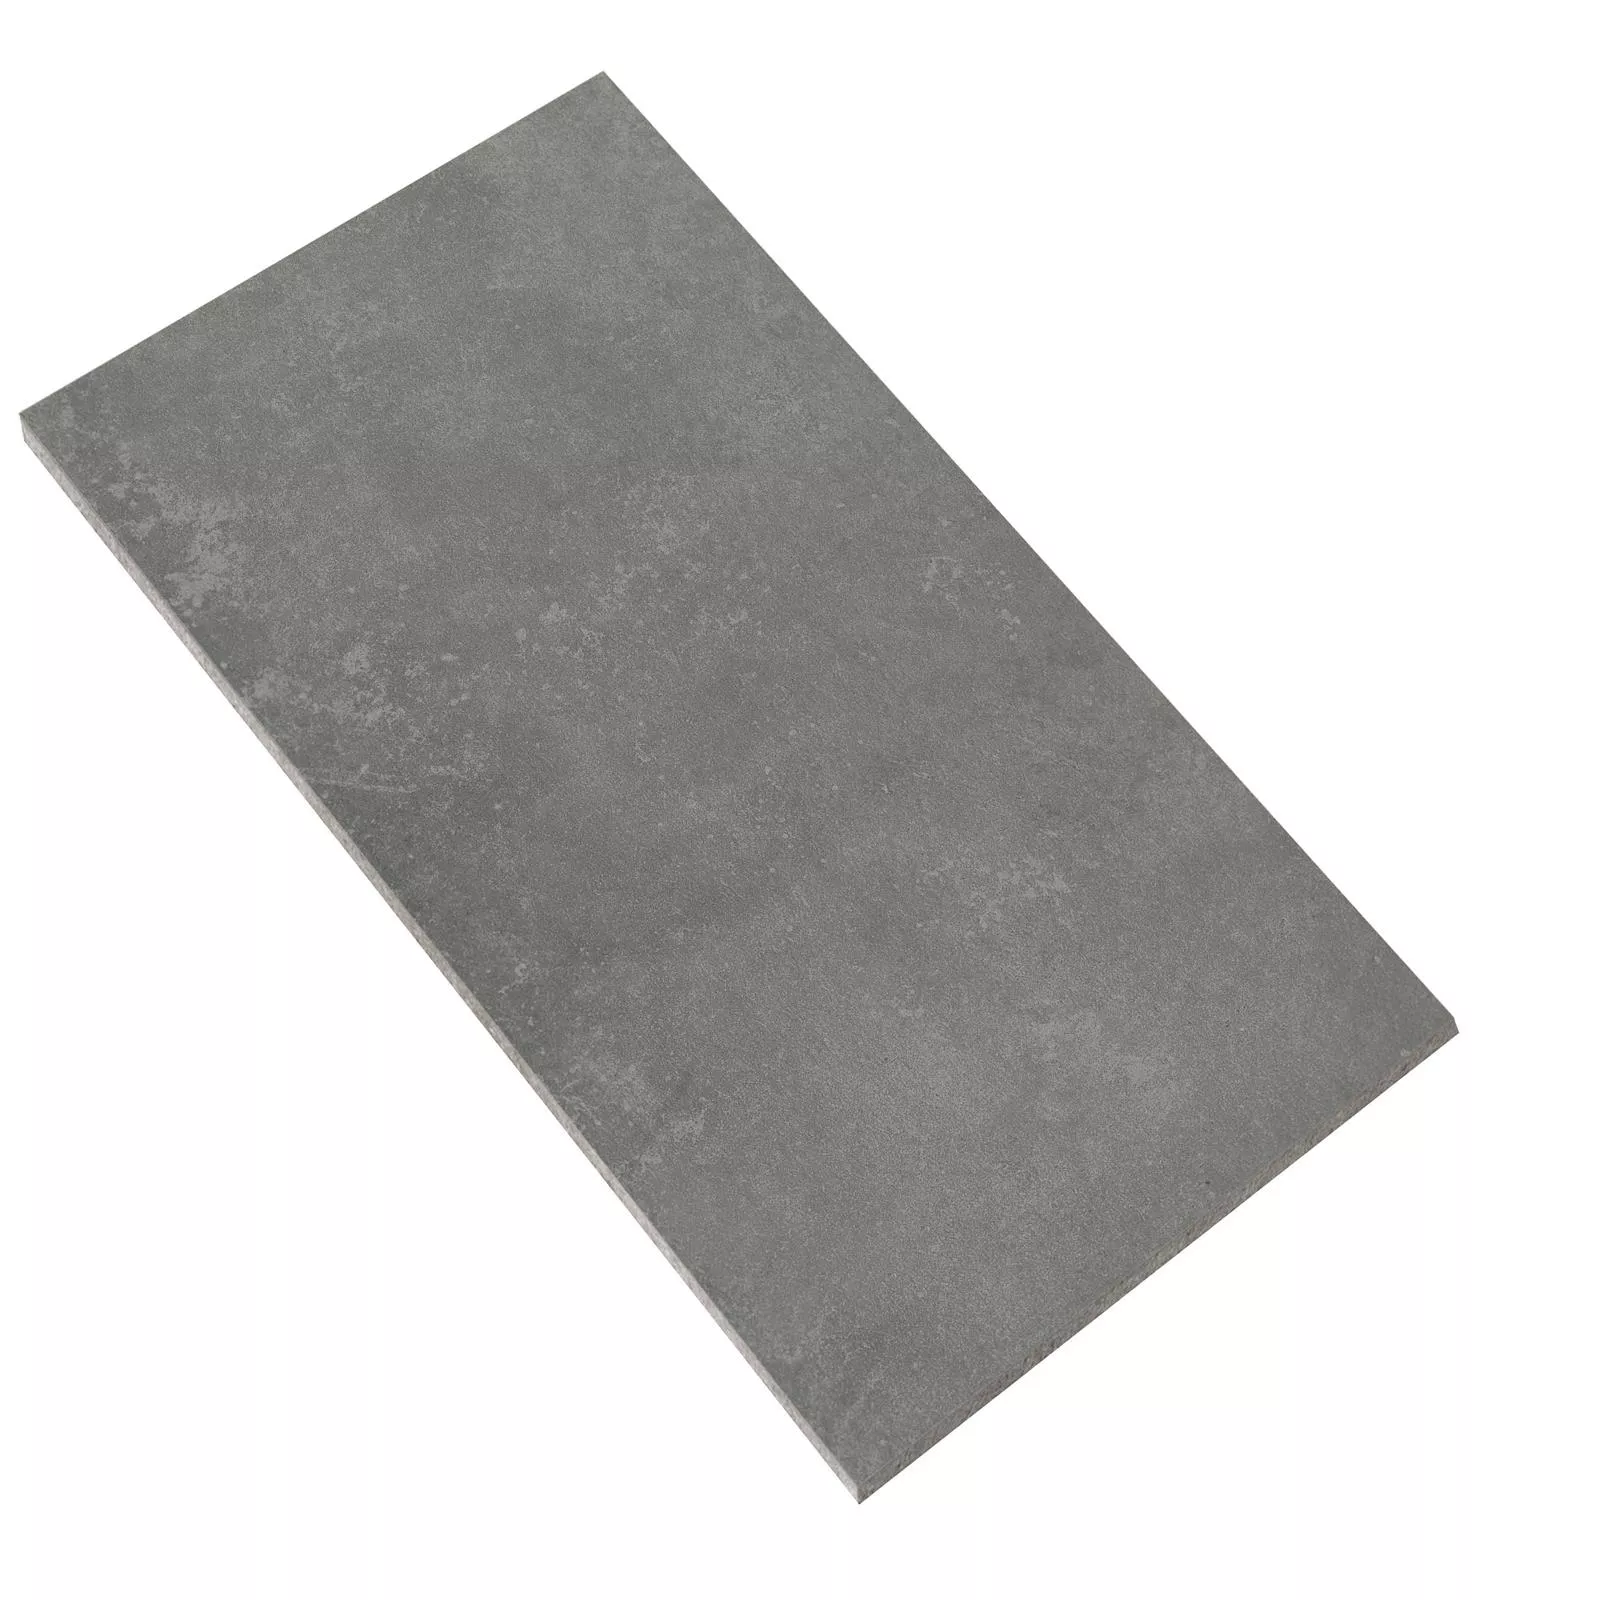 Vloertegels Cement Optic Nepal Slim Donkergrijs 30x60cm